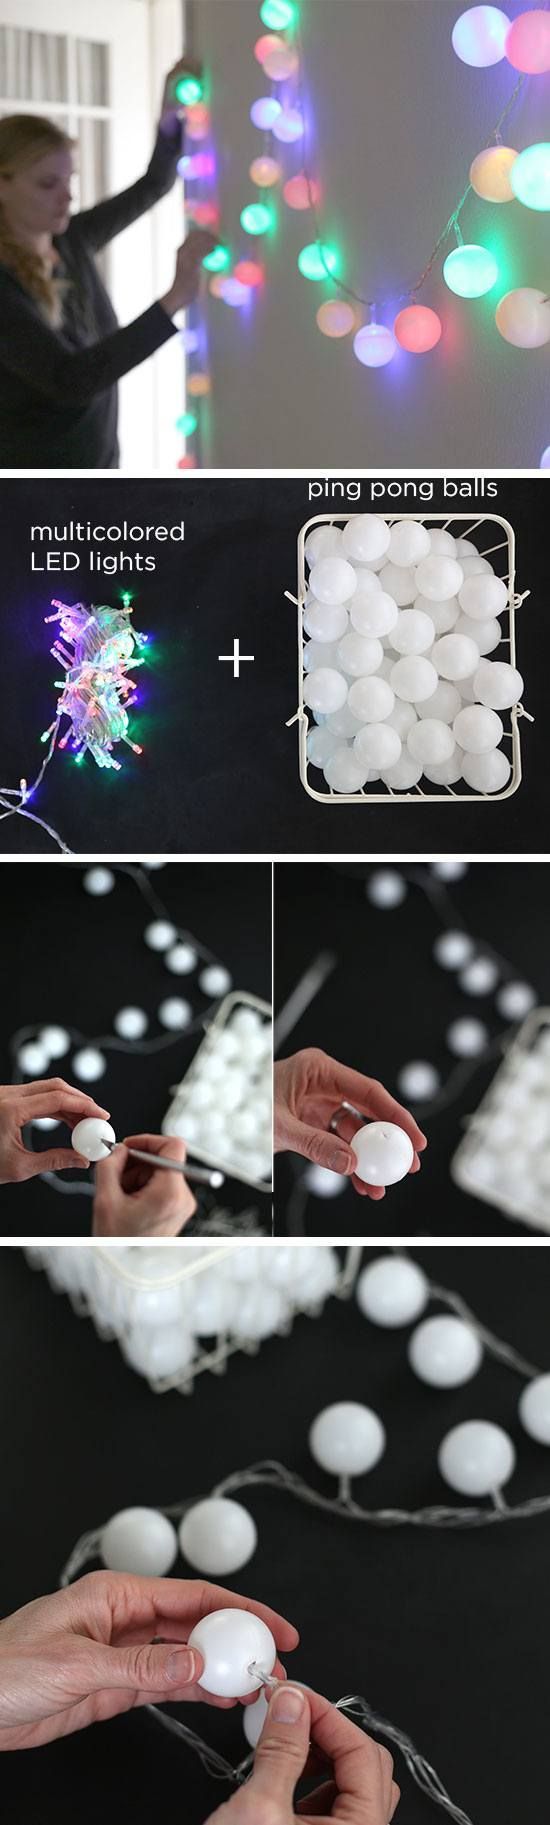 DIY Ping Pong Ball Festive Lights | Dollar Store DIY Christmas Decor Ideas on a Budget